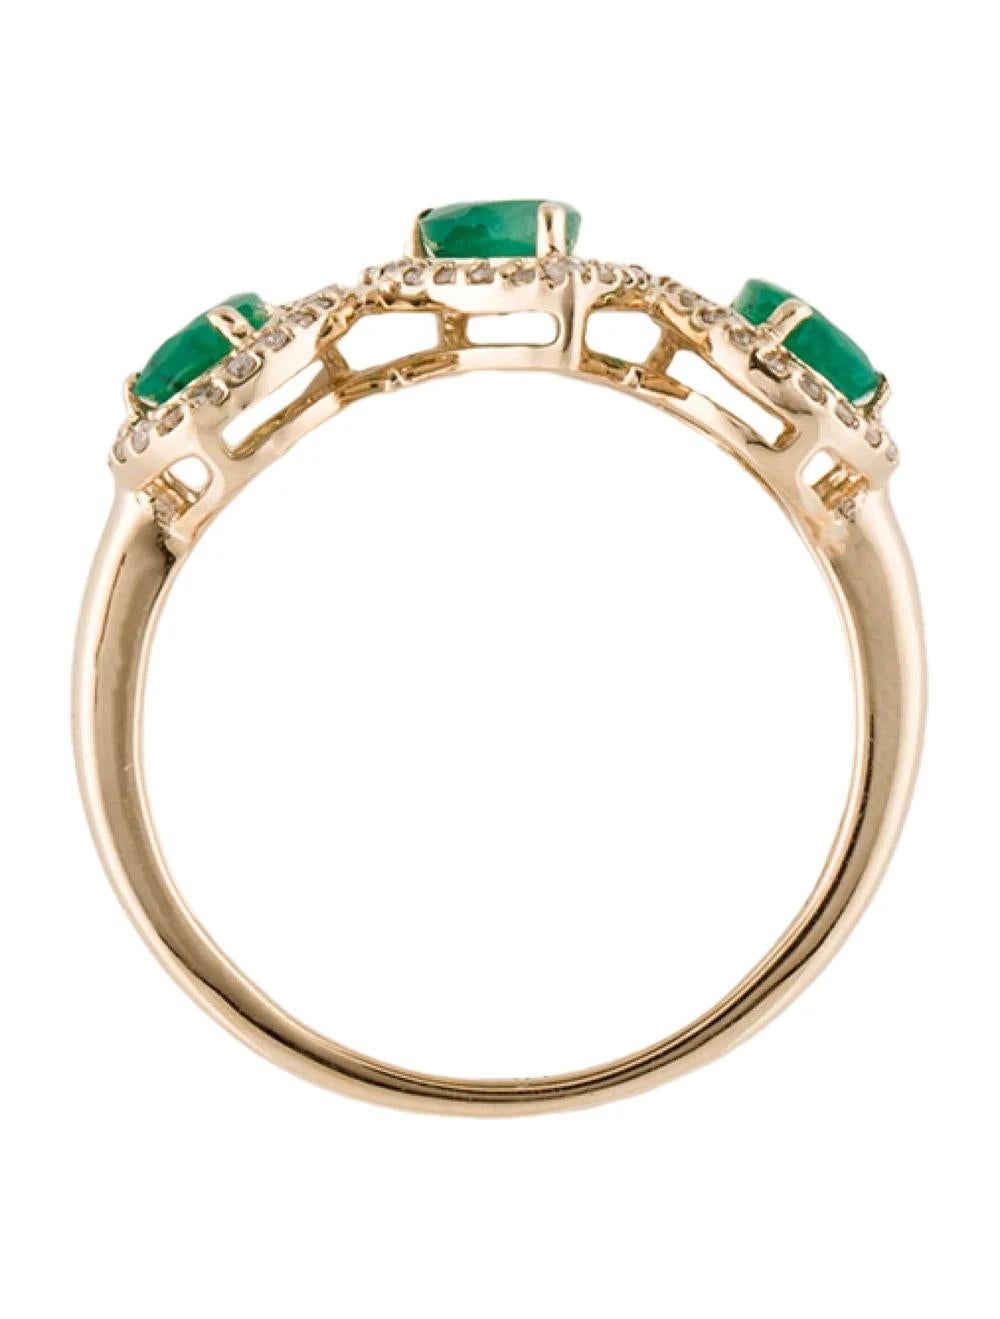 Women's 14K Emerald Diamond Cocktail Ring Vintage Style Size 7.75, Gemstone Fine Jewelry For Sale